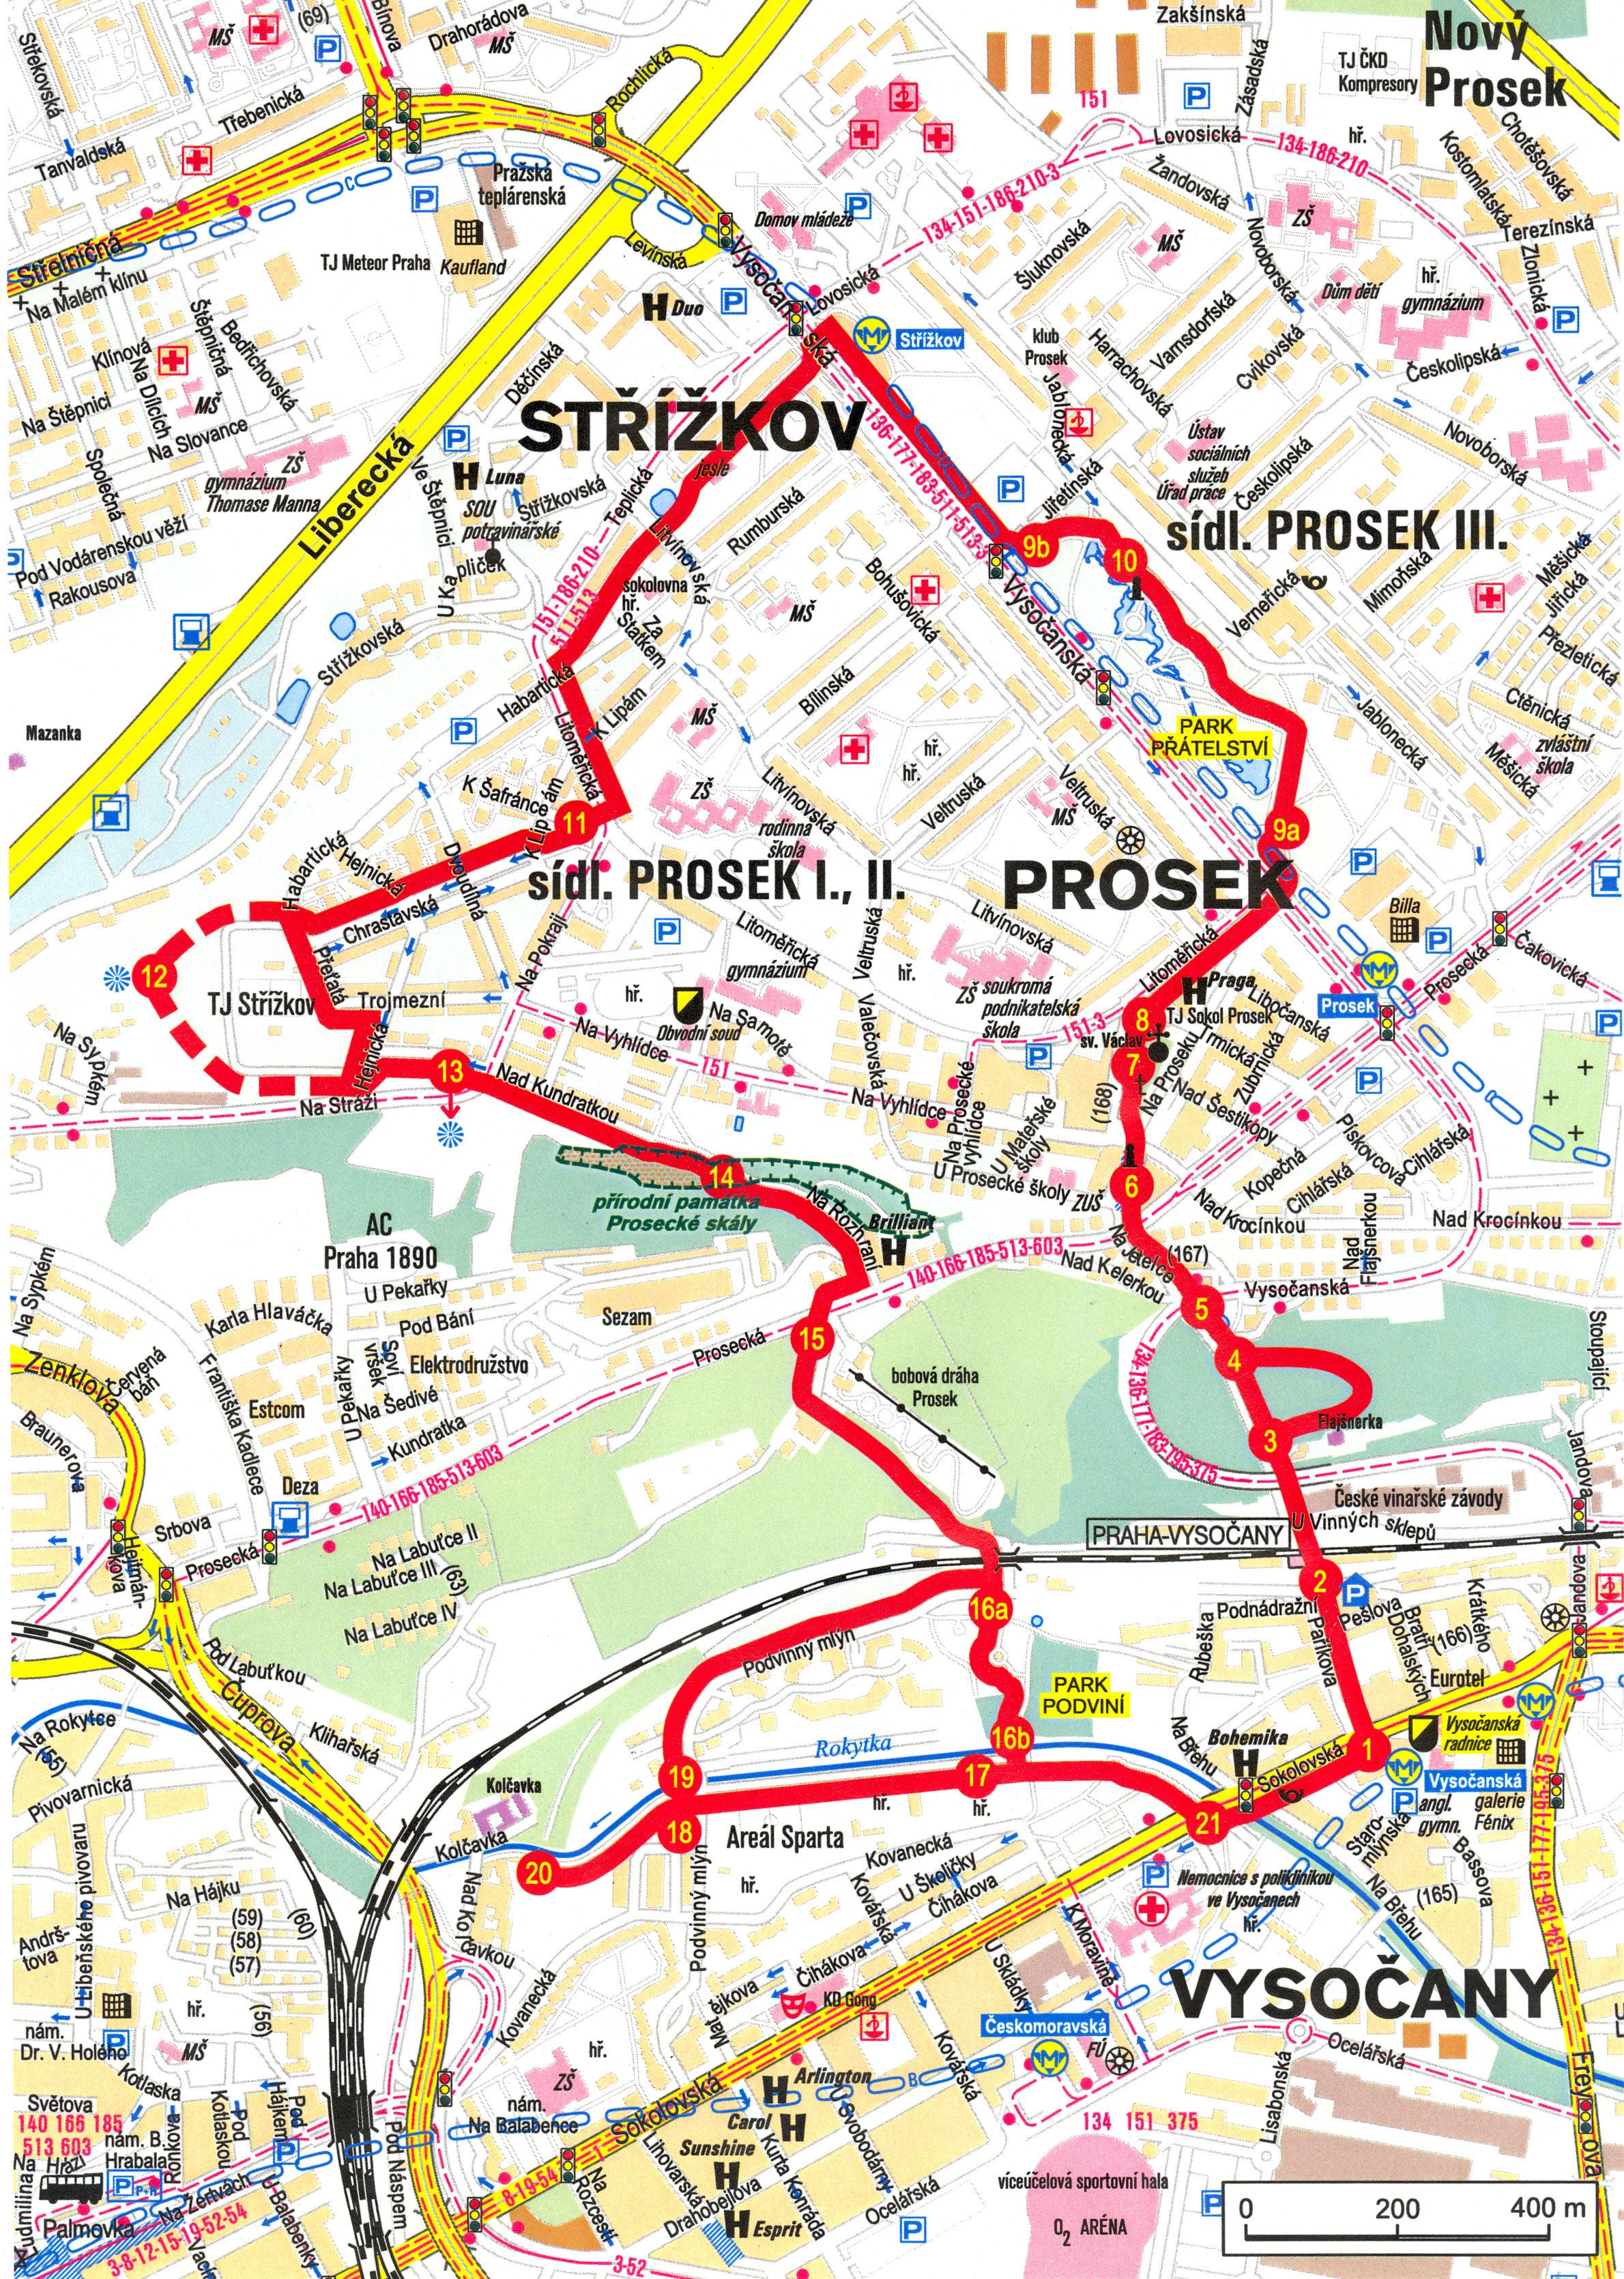 praha prosek mapa I. severozápadní stezka | Městská část Praha 9 praha prosek mapa